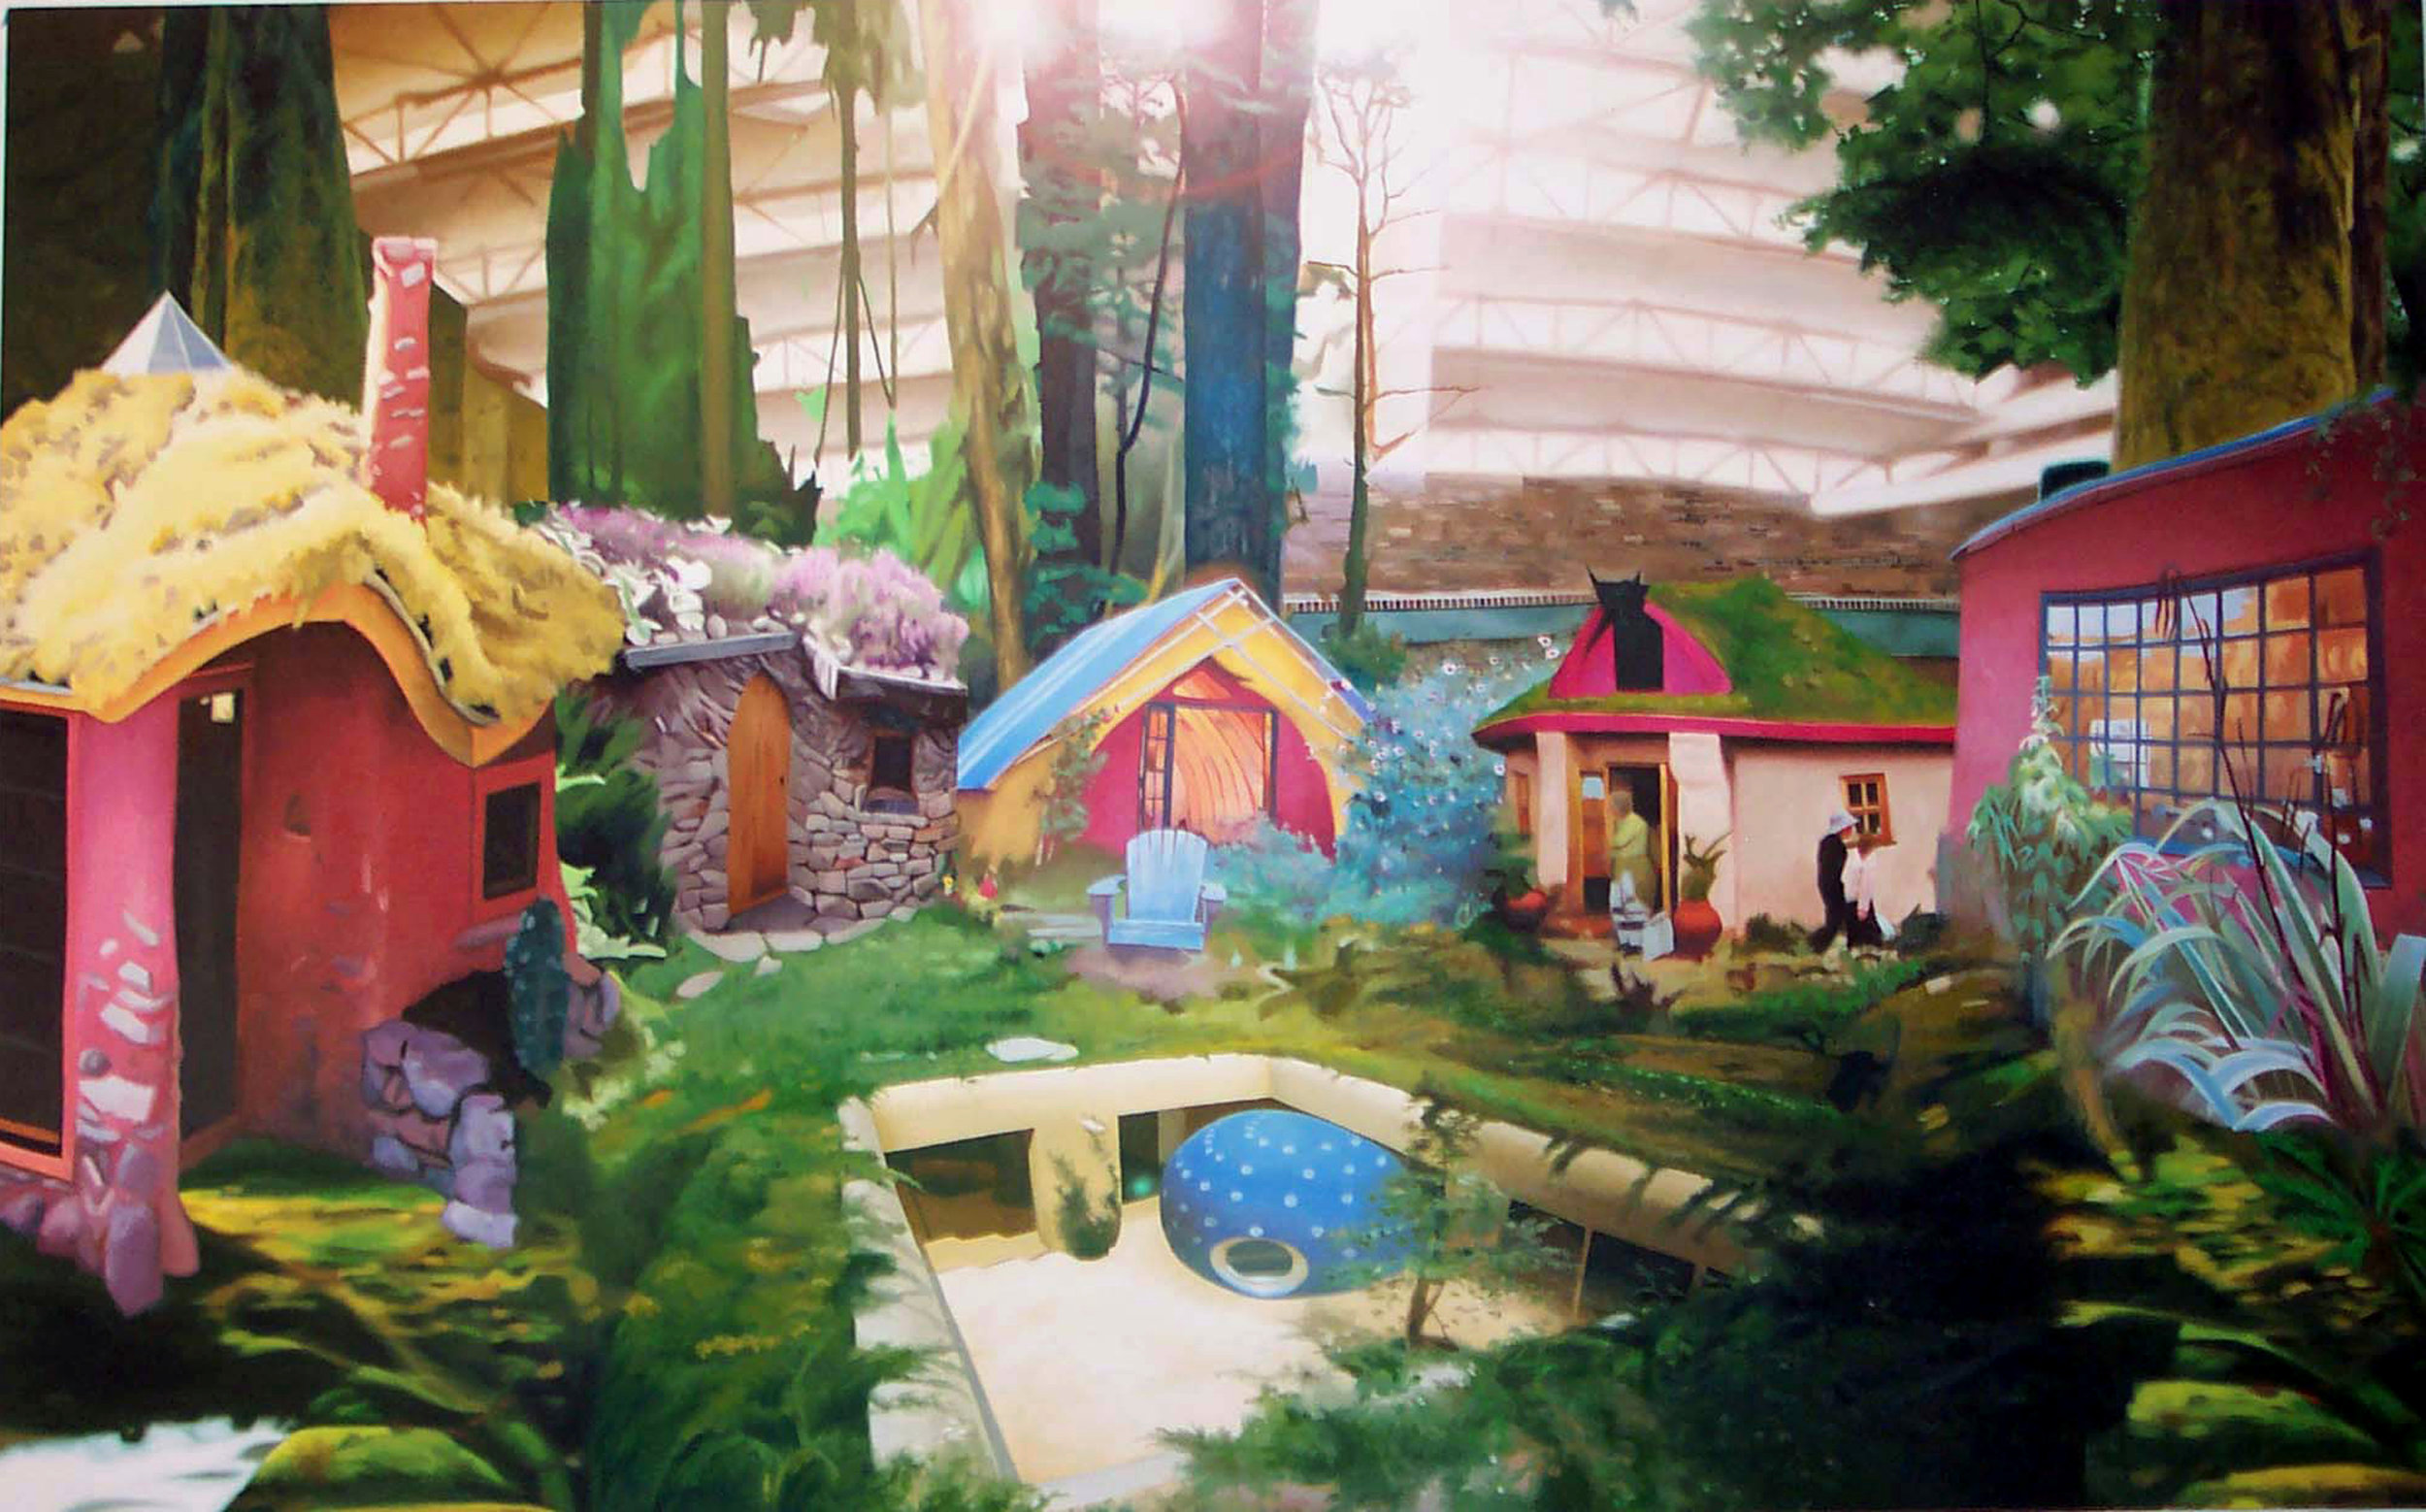 Indoor Urban Eco Village, oil on canvas, 62"X 100" 2004